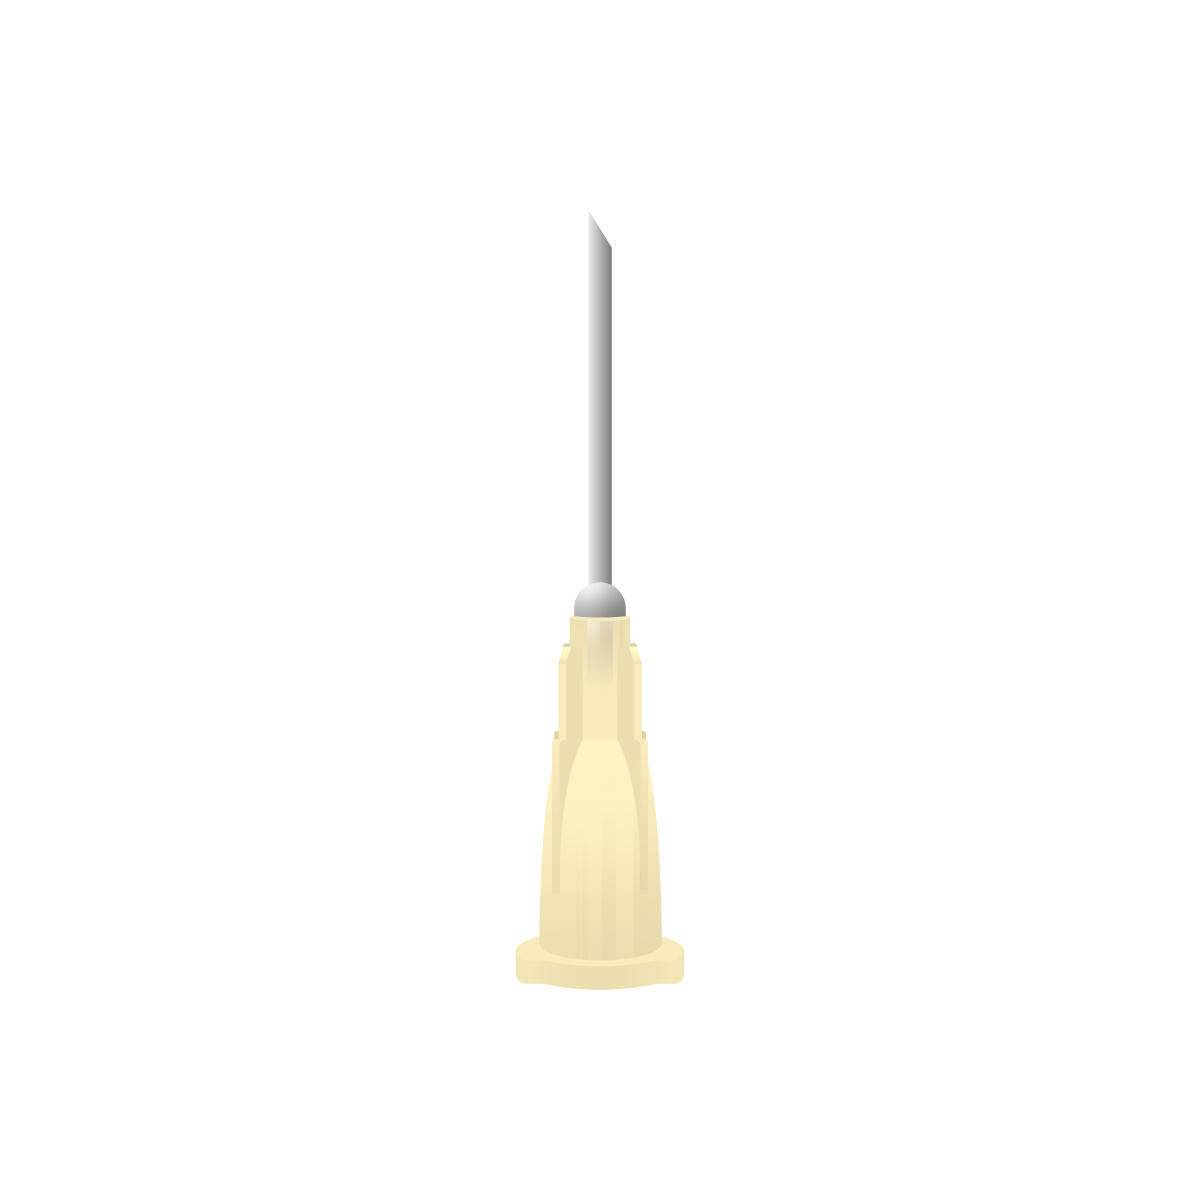 17g 3/4 inch Agriject Disposable Needles Poly Hub 178080 UKMEDI.CO.UK